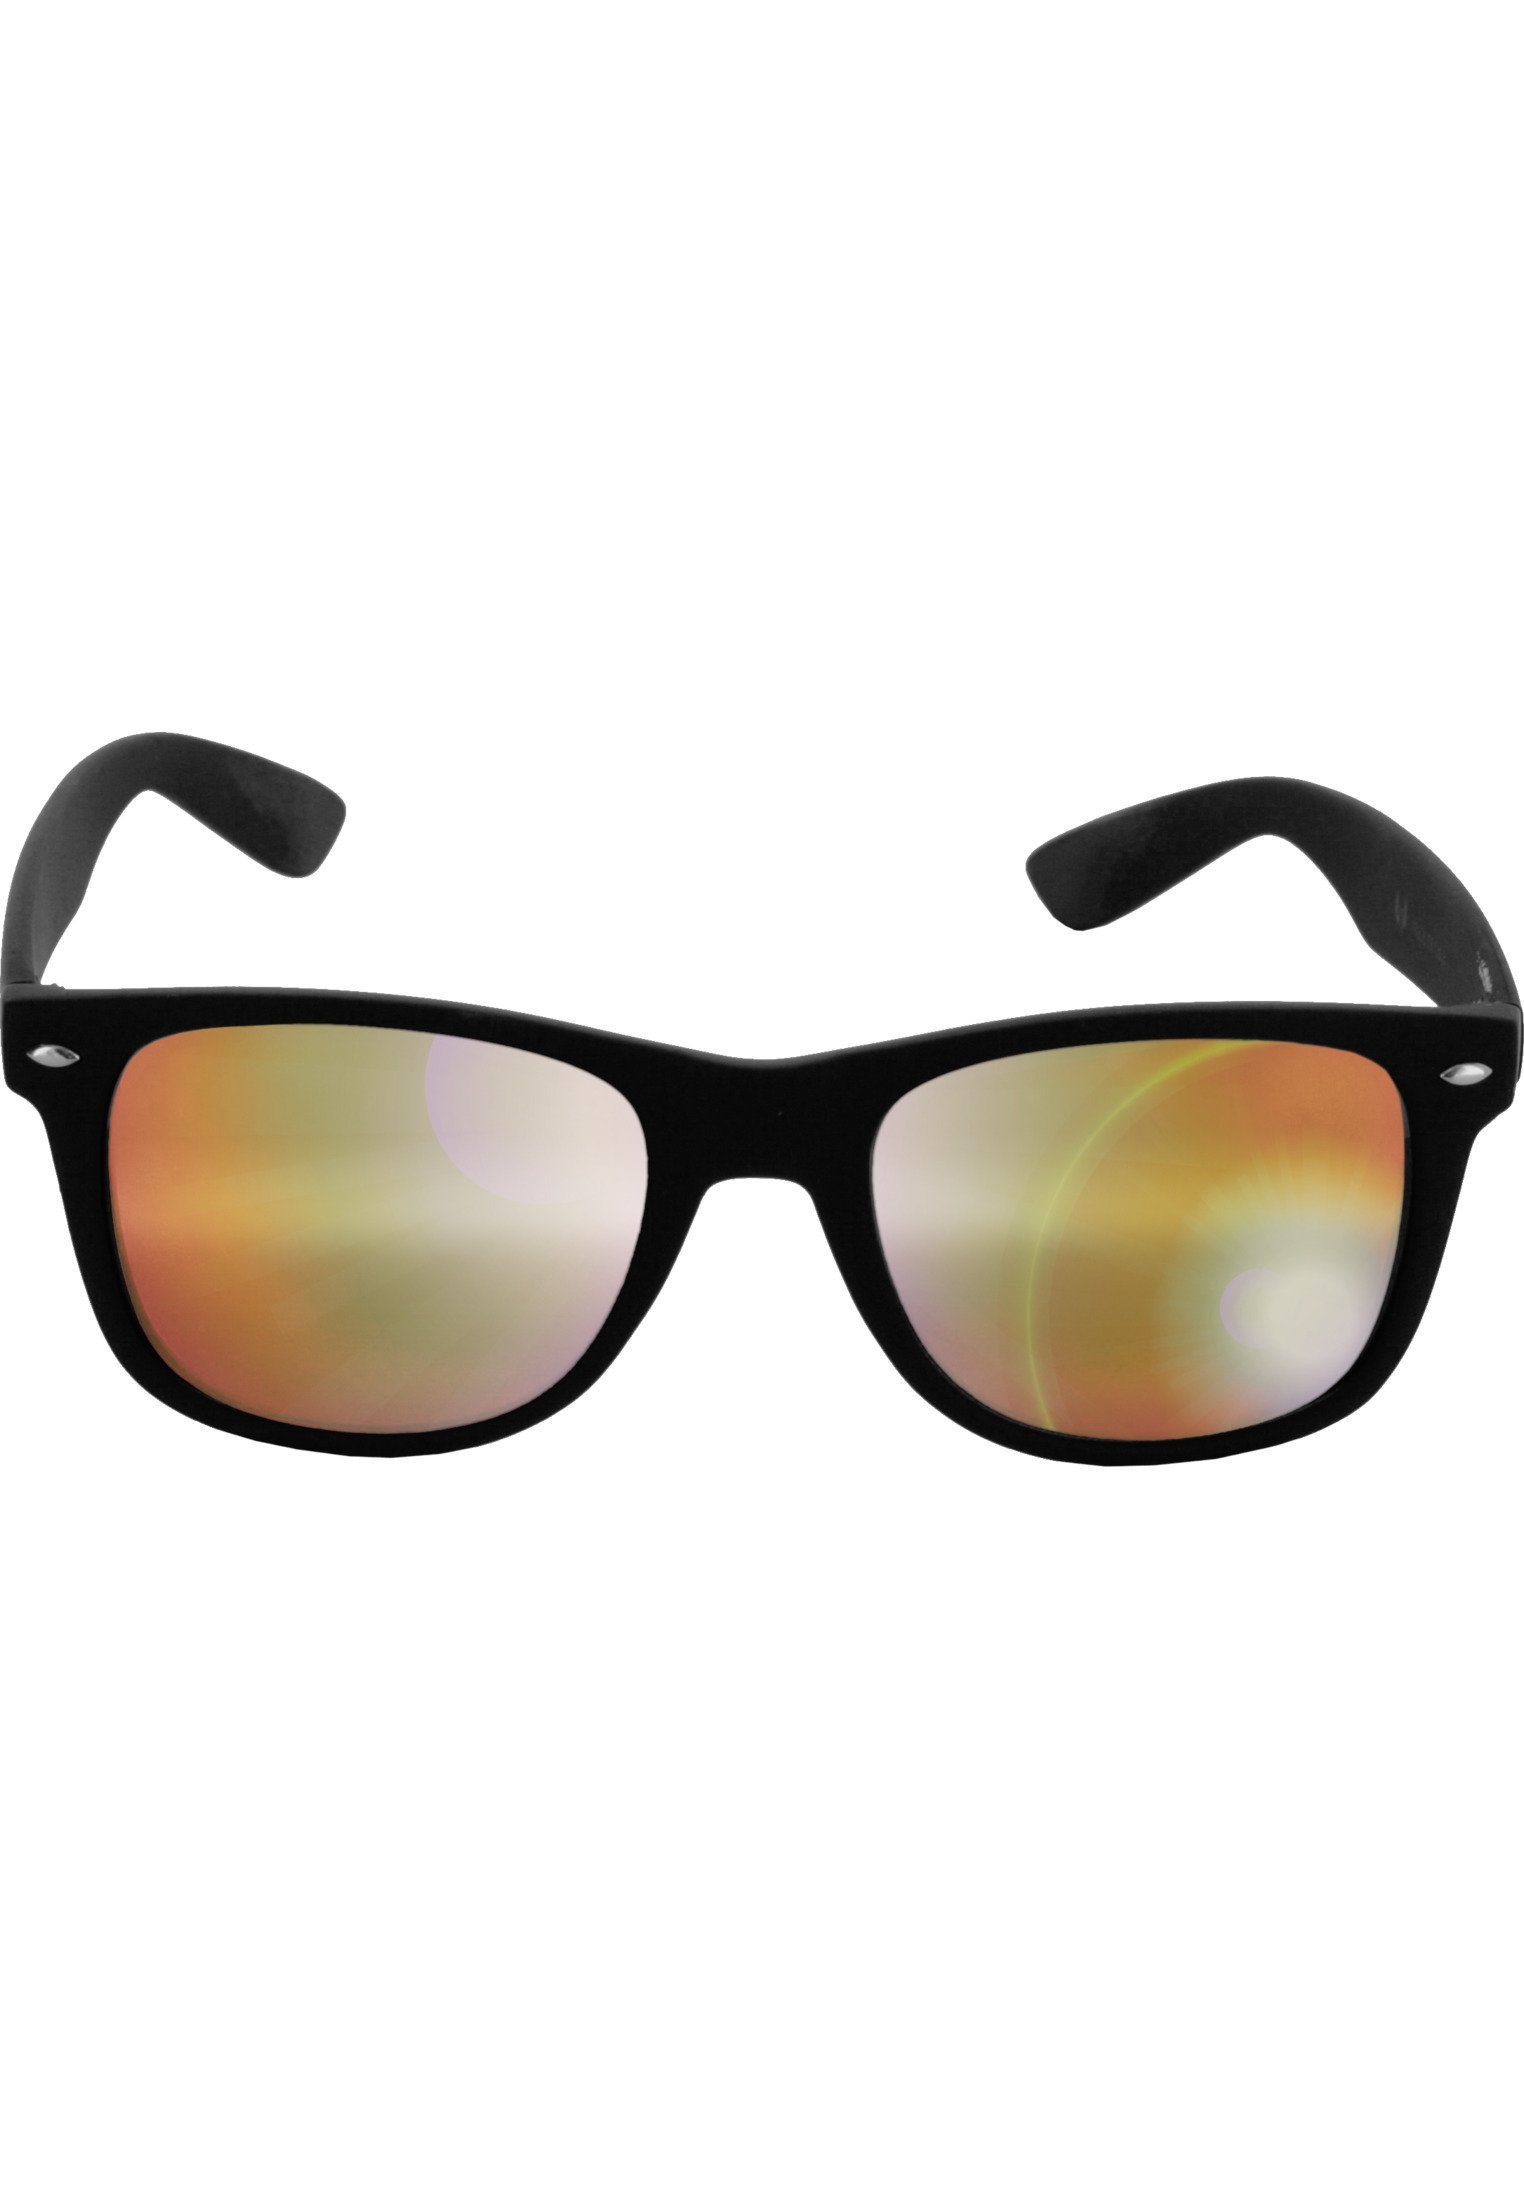 blk/orange Sonnenbrille Sunglasses Mirror MSTRDS Likoma Accessoires